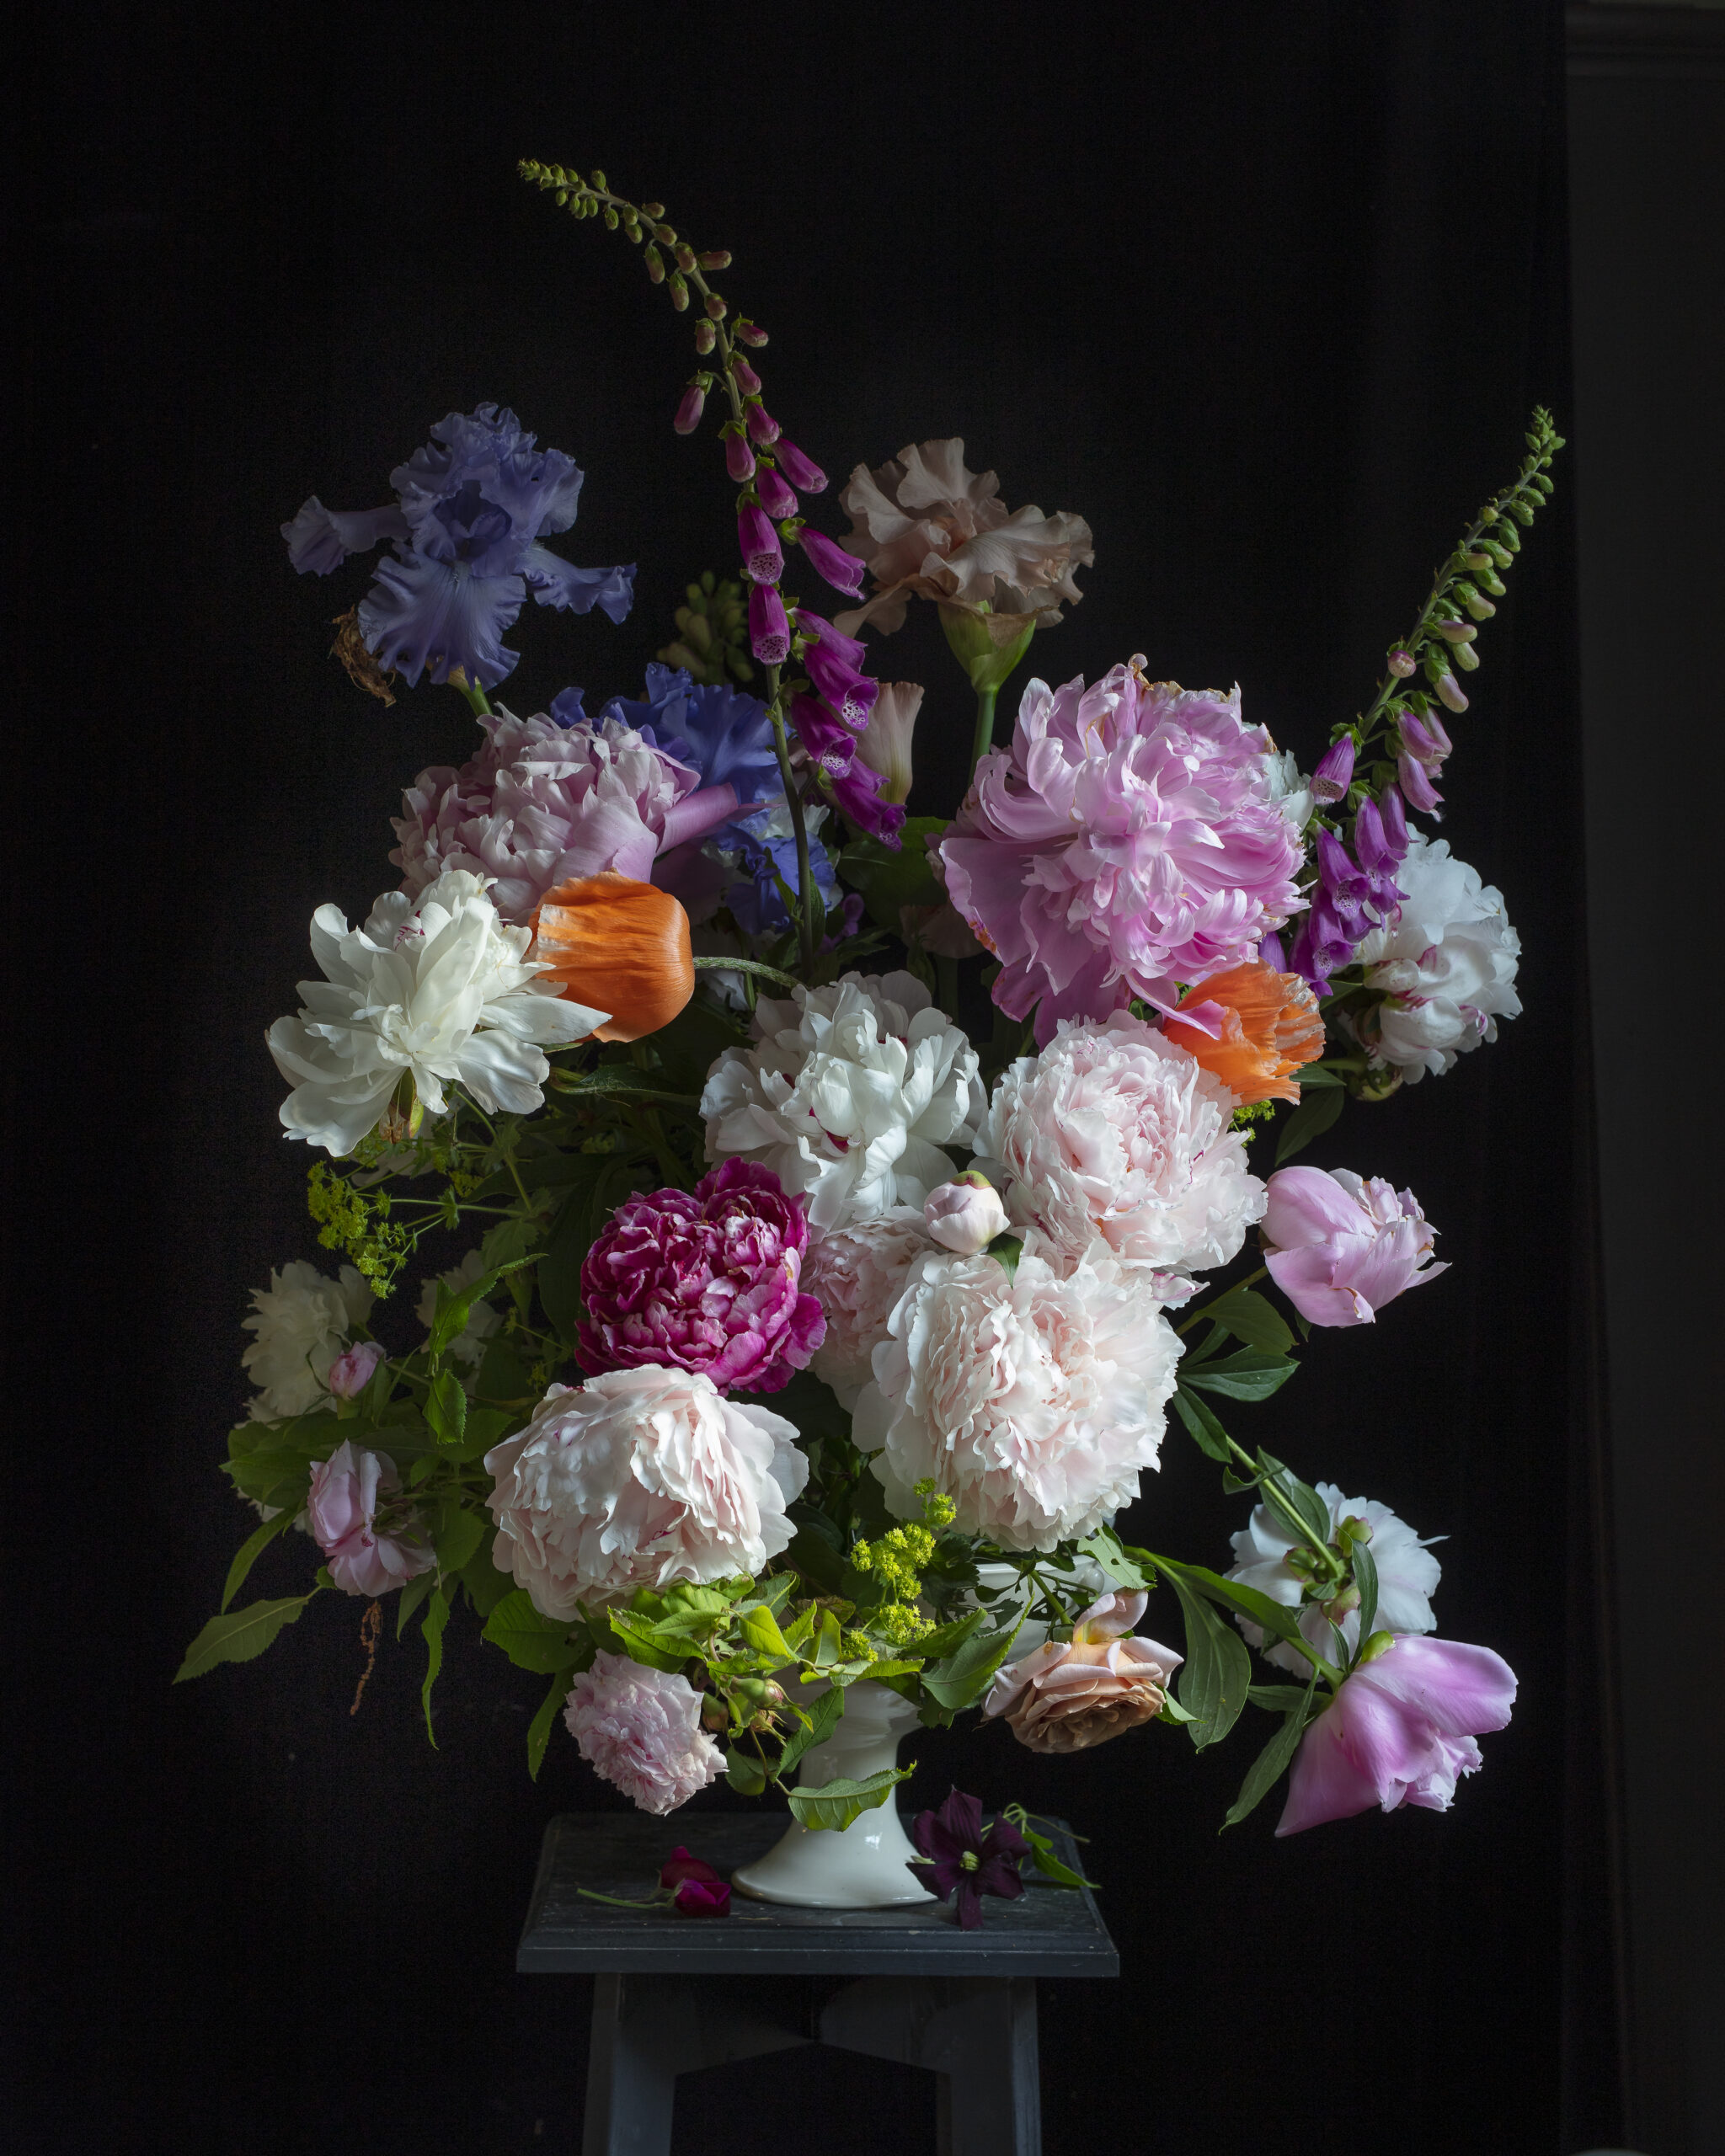 A vase and floral display by Frances Palmer. FRANCES PALMER